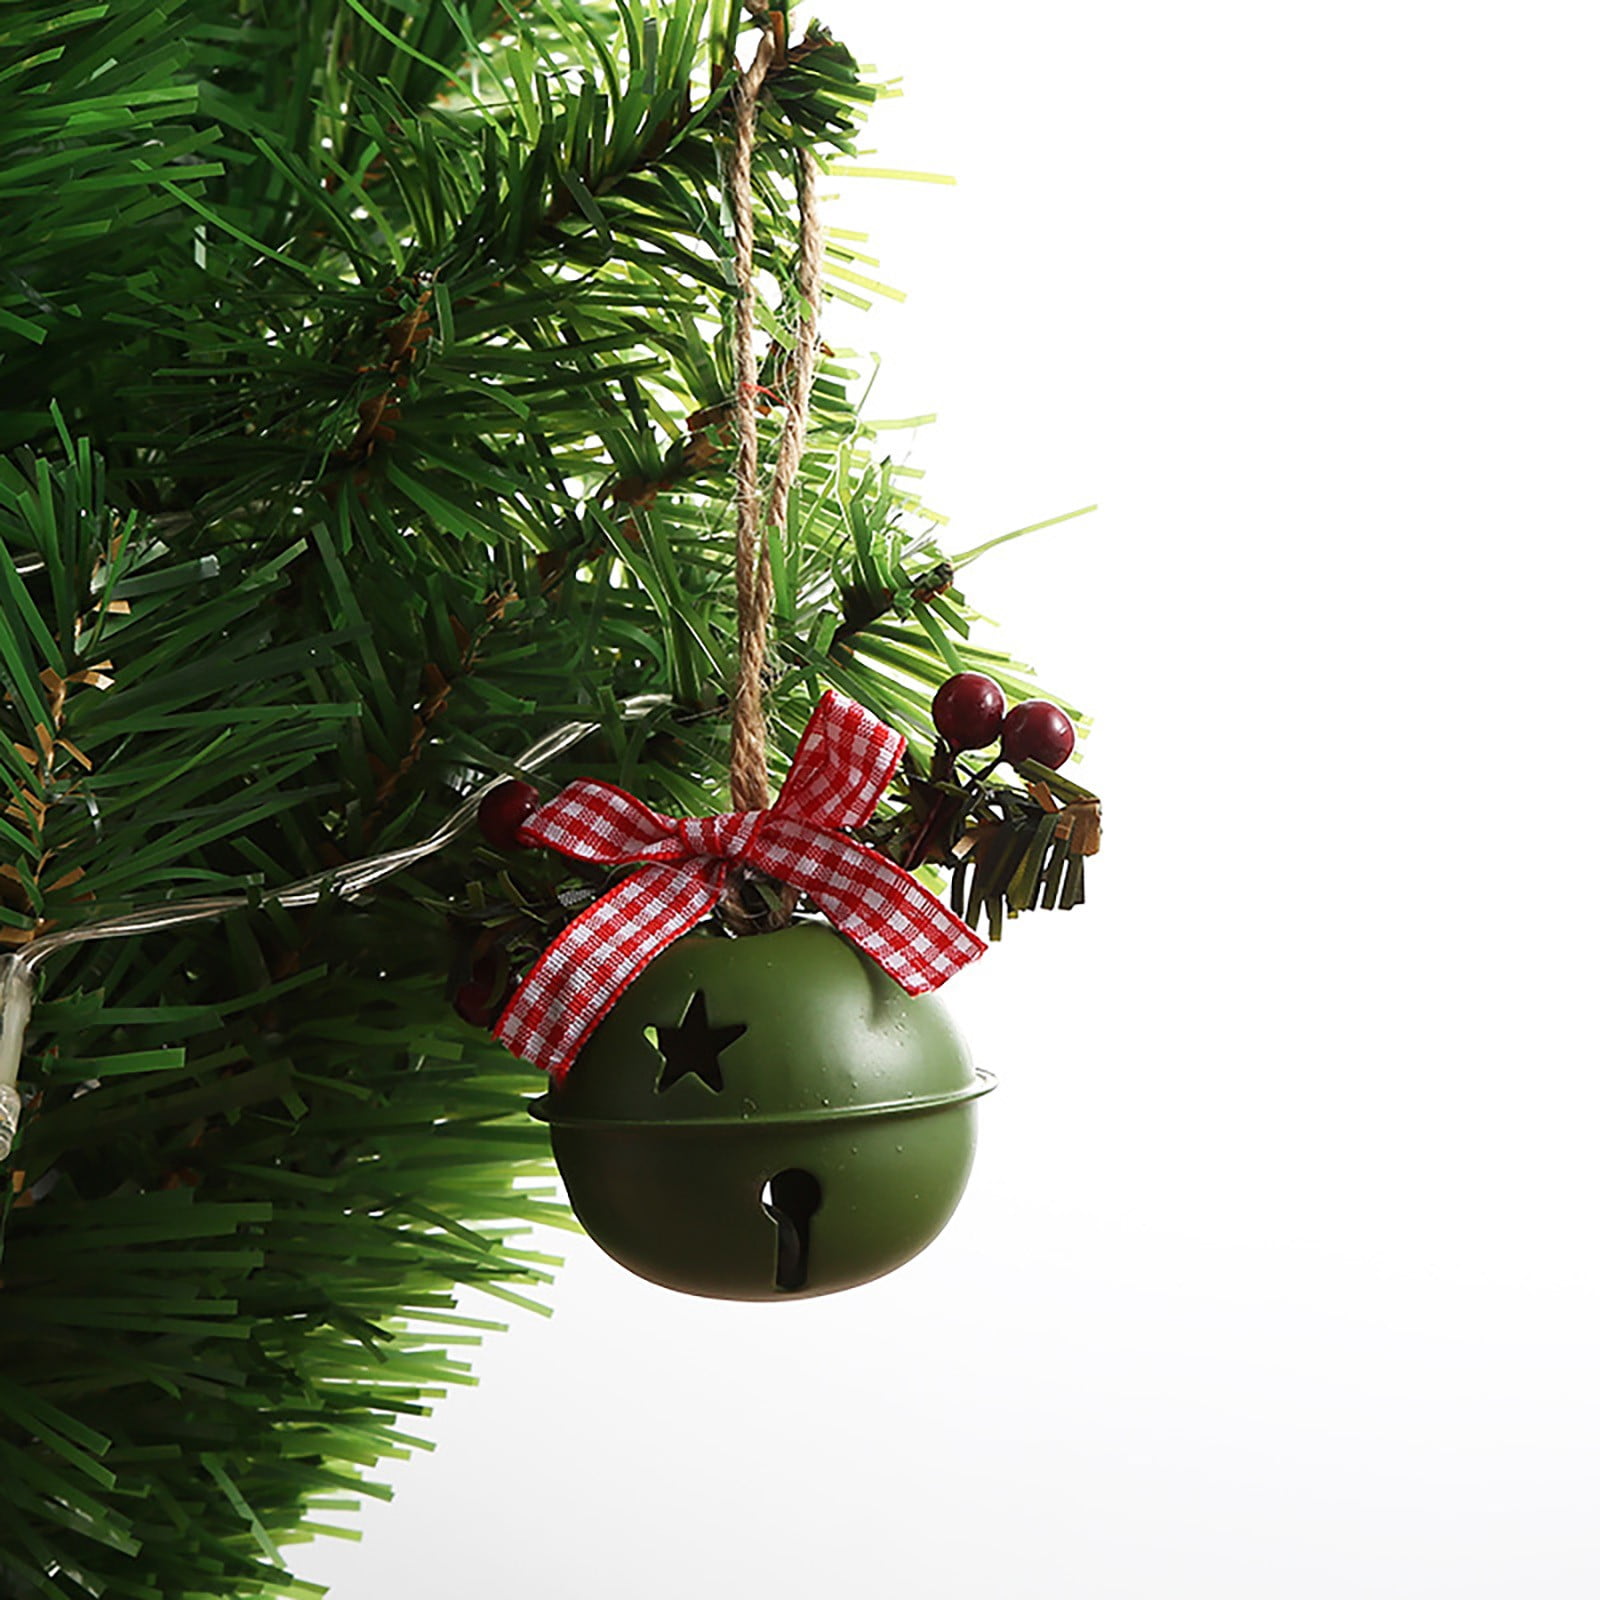 Haute Decor Large Jingle Bell Ornaments - 6 Pack - Gold Foil